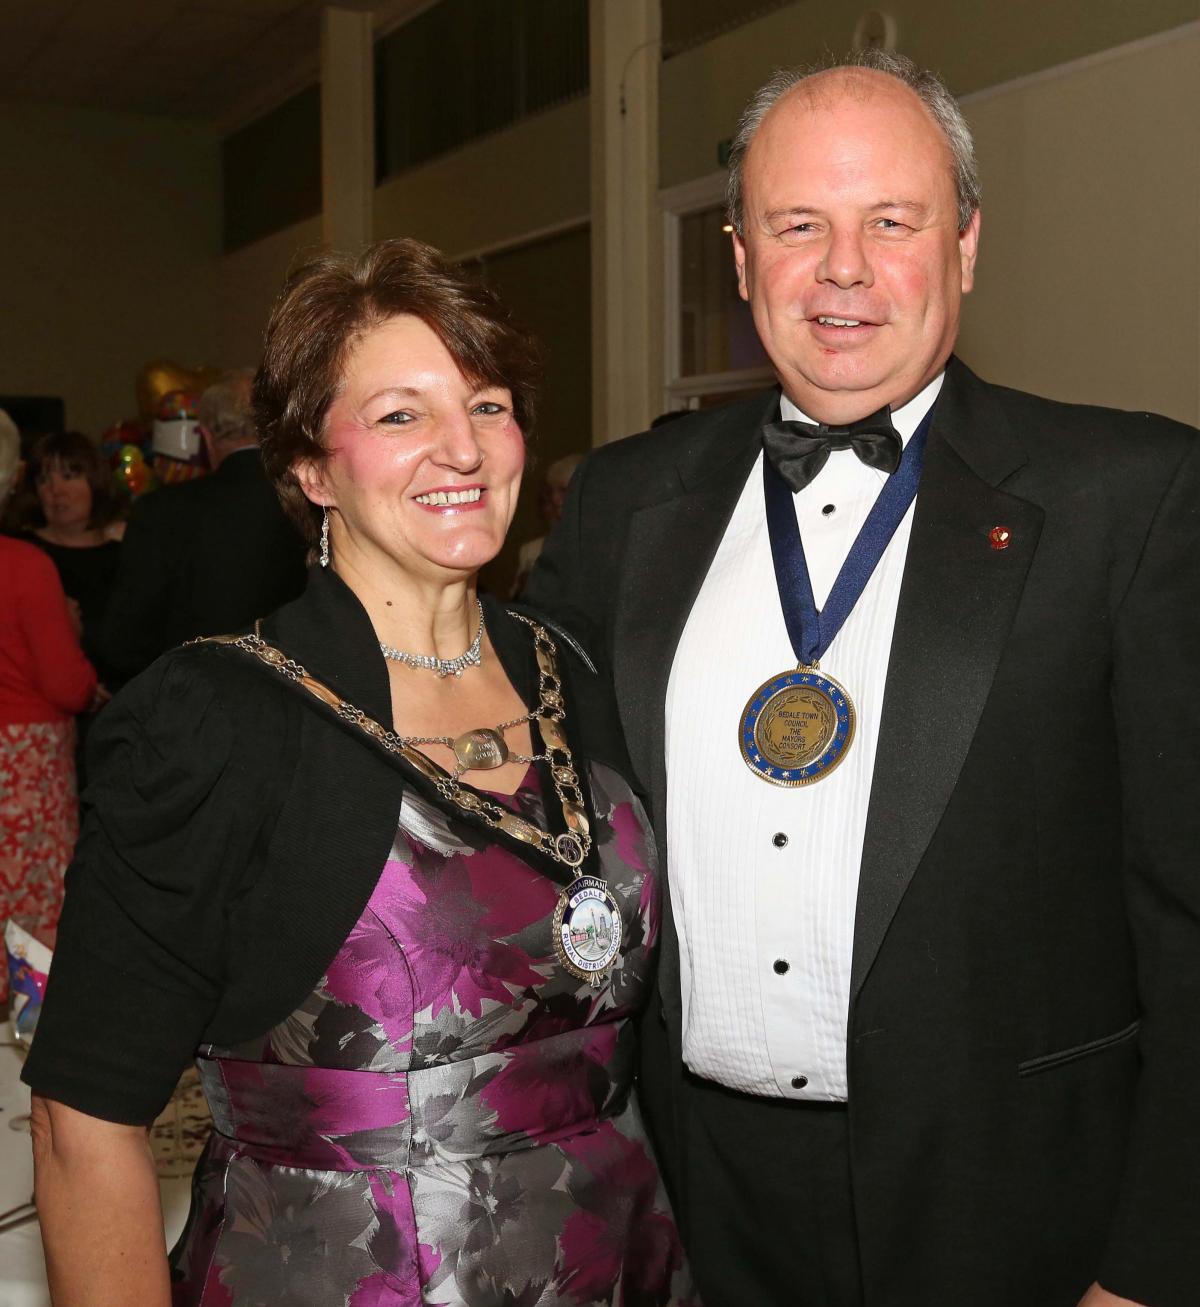 The Mayor of Bedale Cllr Christine Mollard and husband David